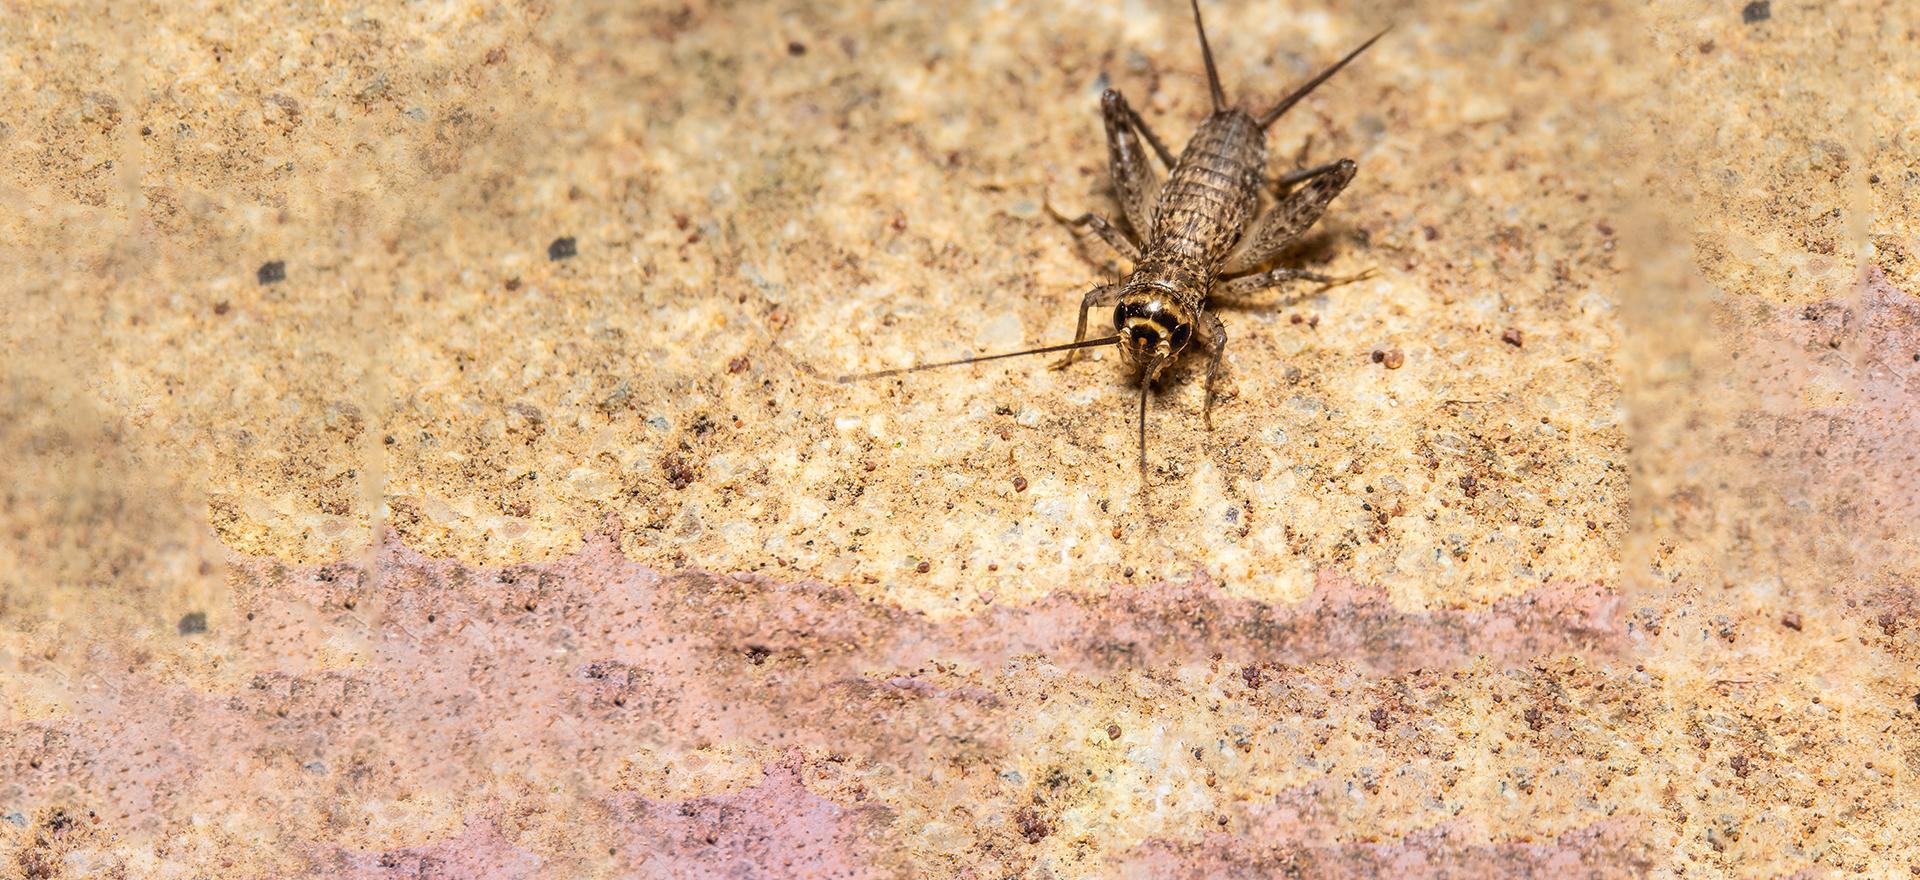 close up of a cricket